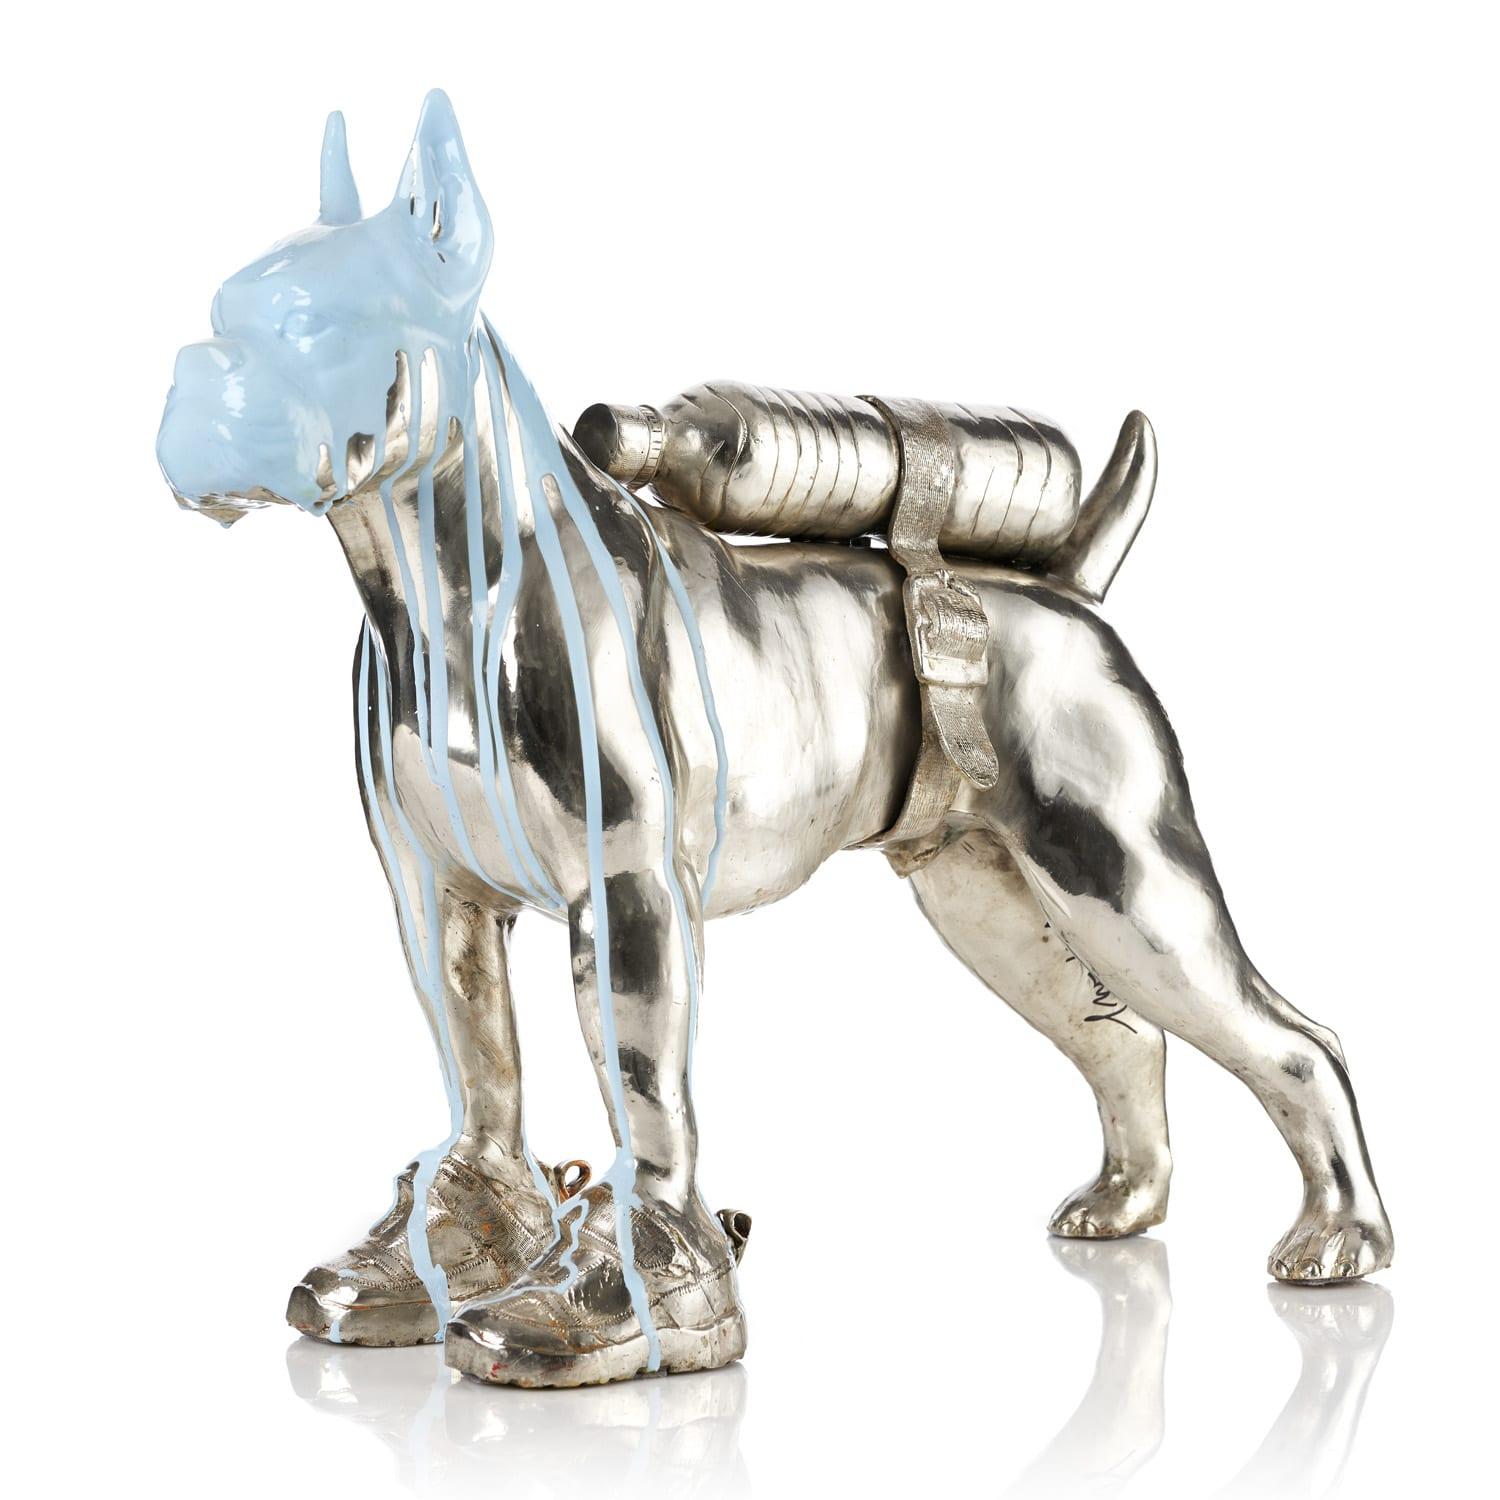 William Sweetlove Figurative Sculpture - Cloned Bulldog with pet bottle